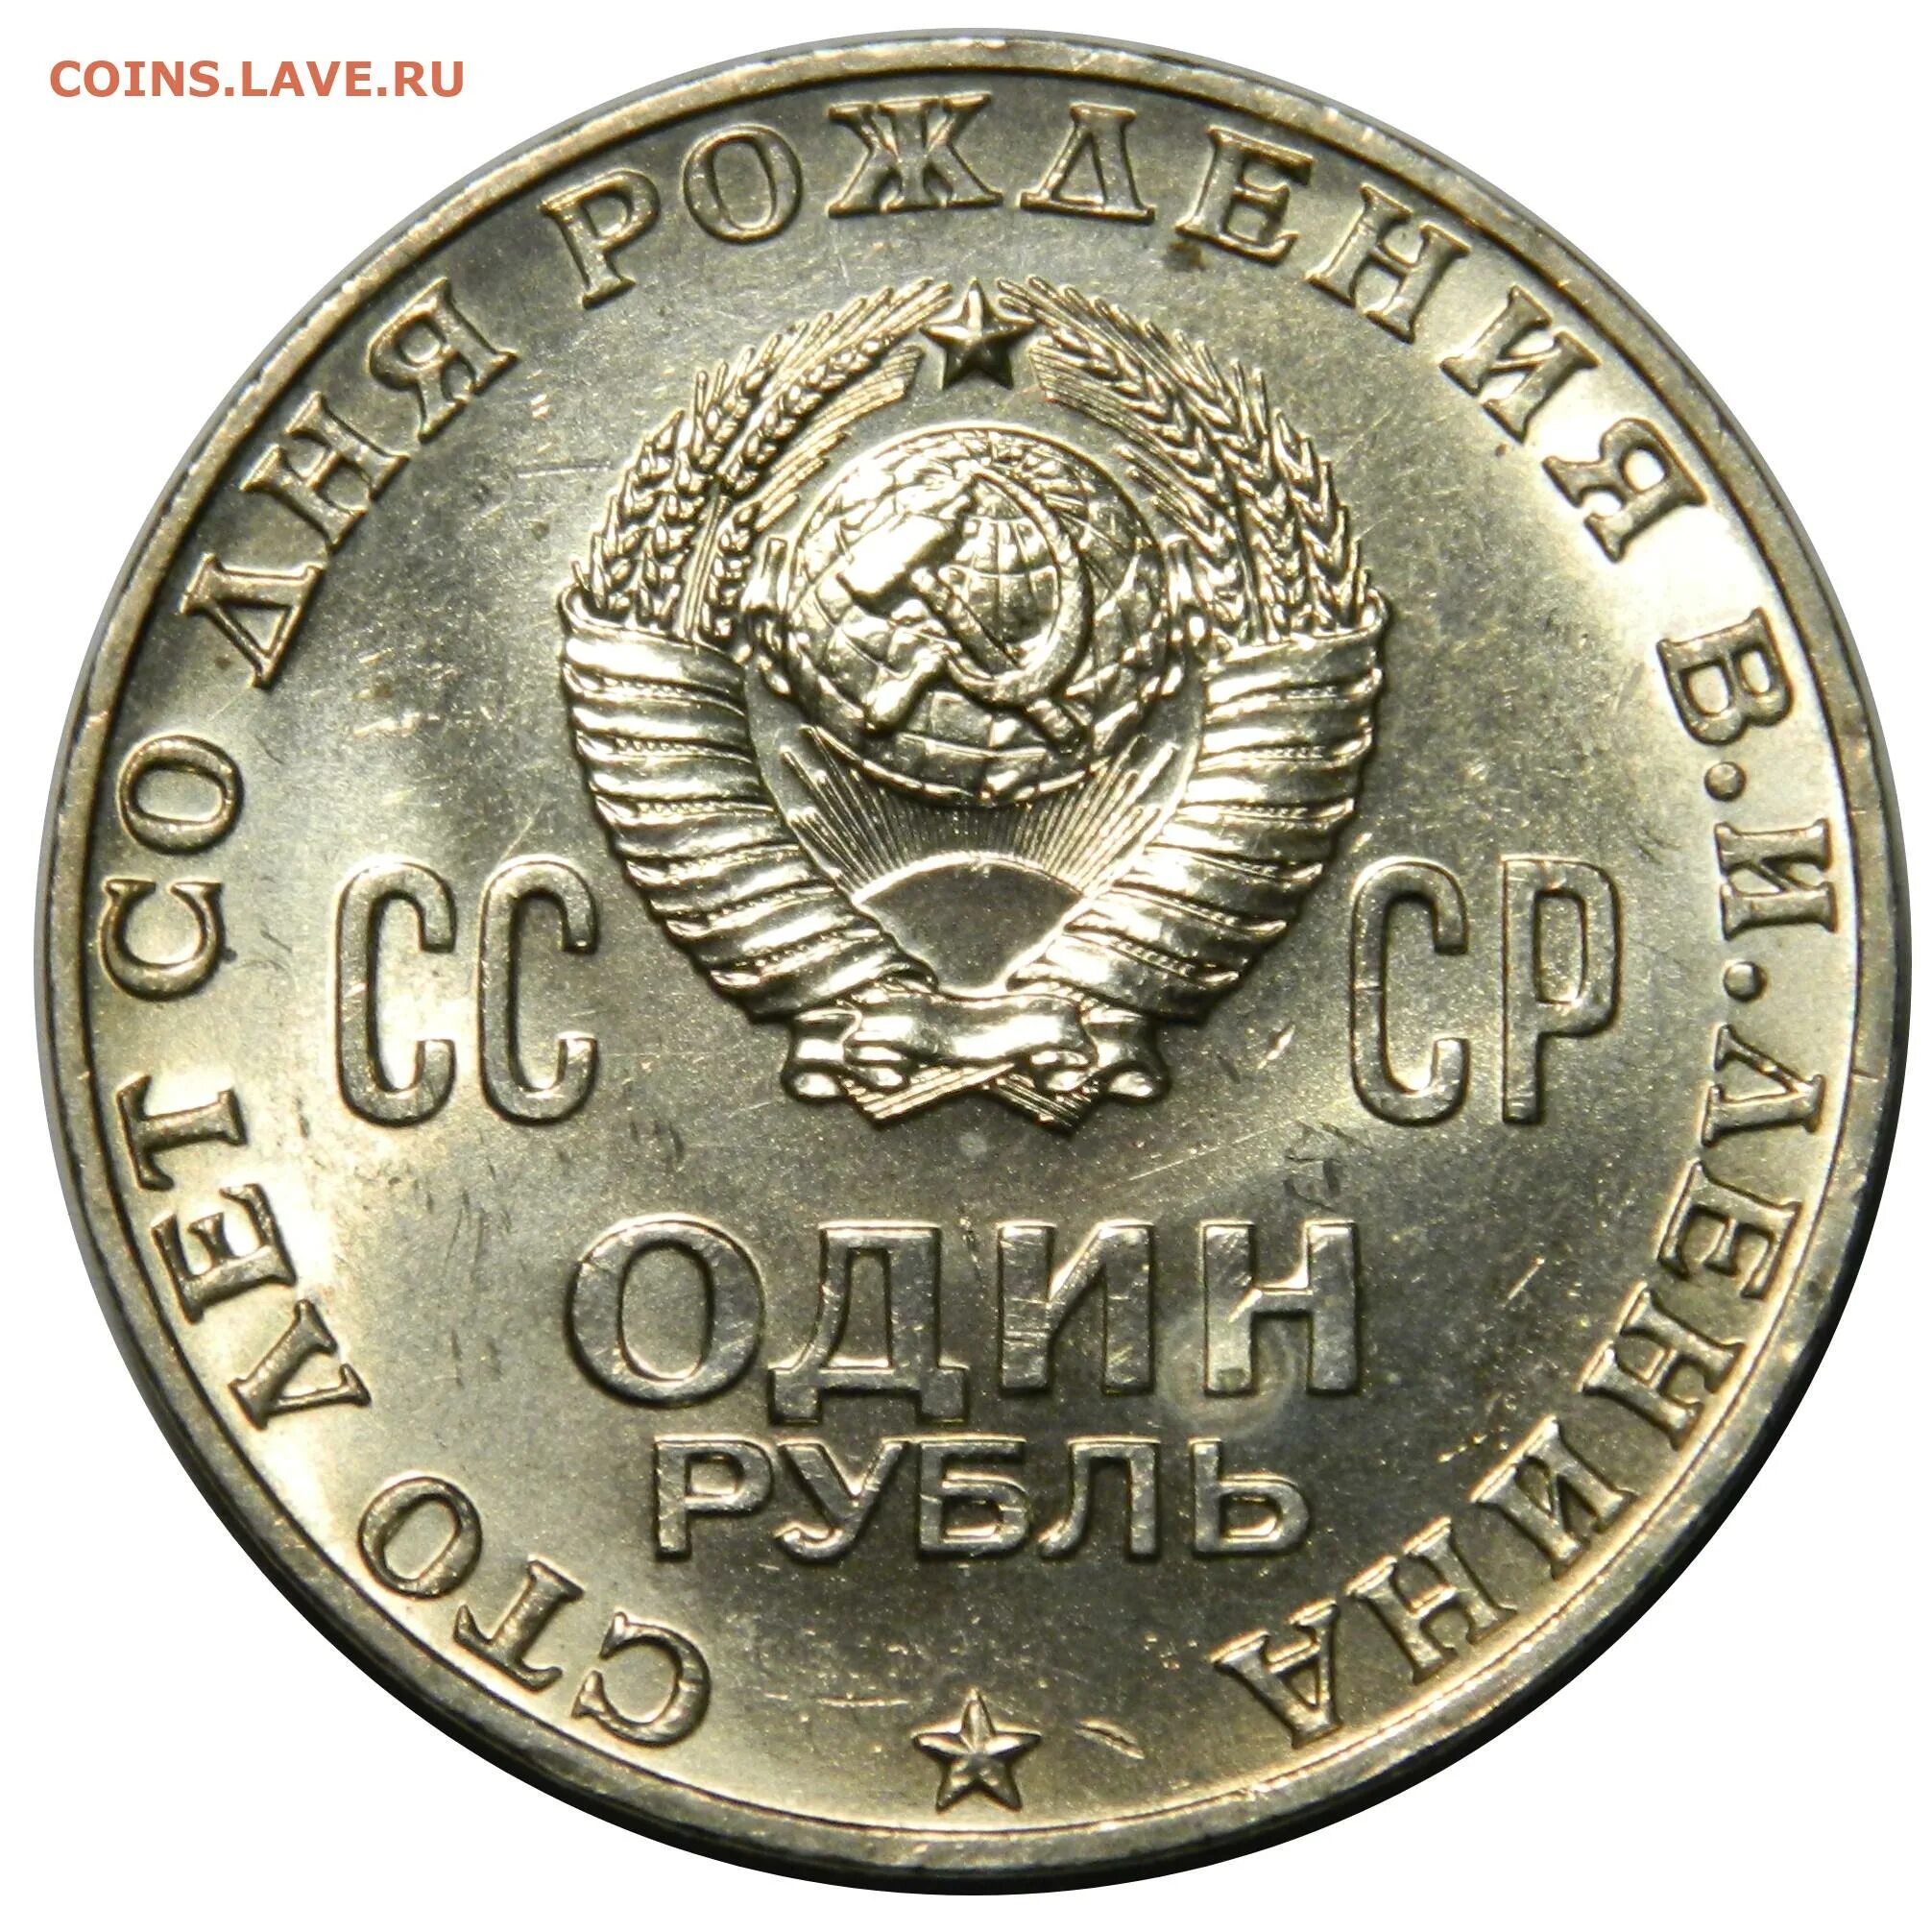 Рубль 1970. 1 Рубль до 1970. 10 Рублей 1970. Ленин 1970.